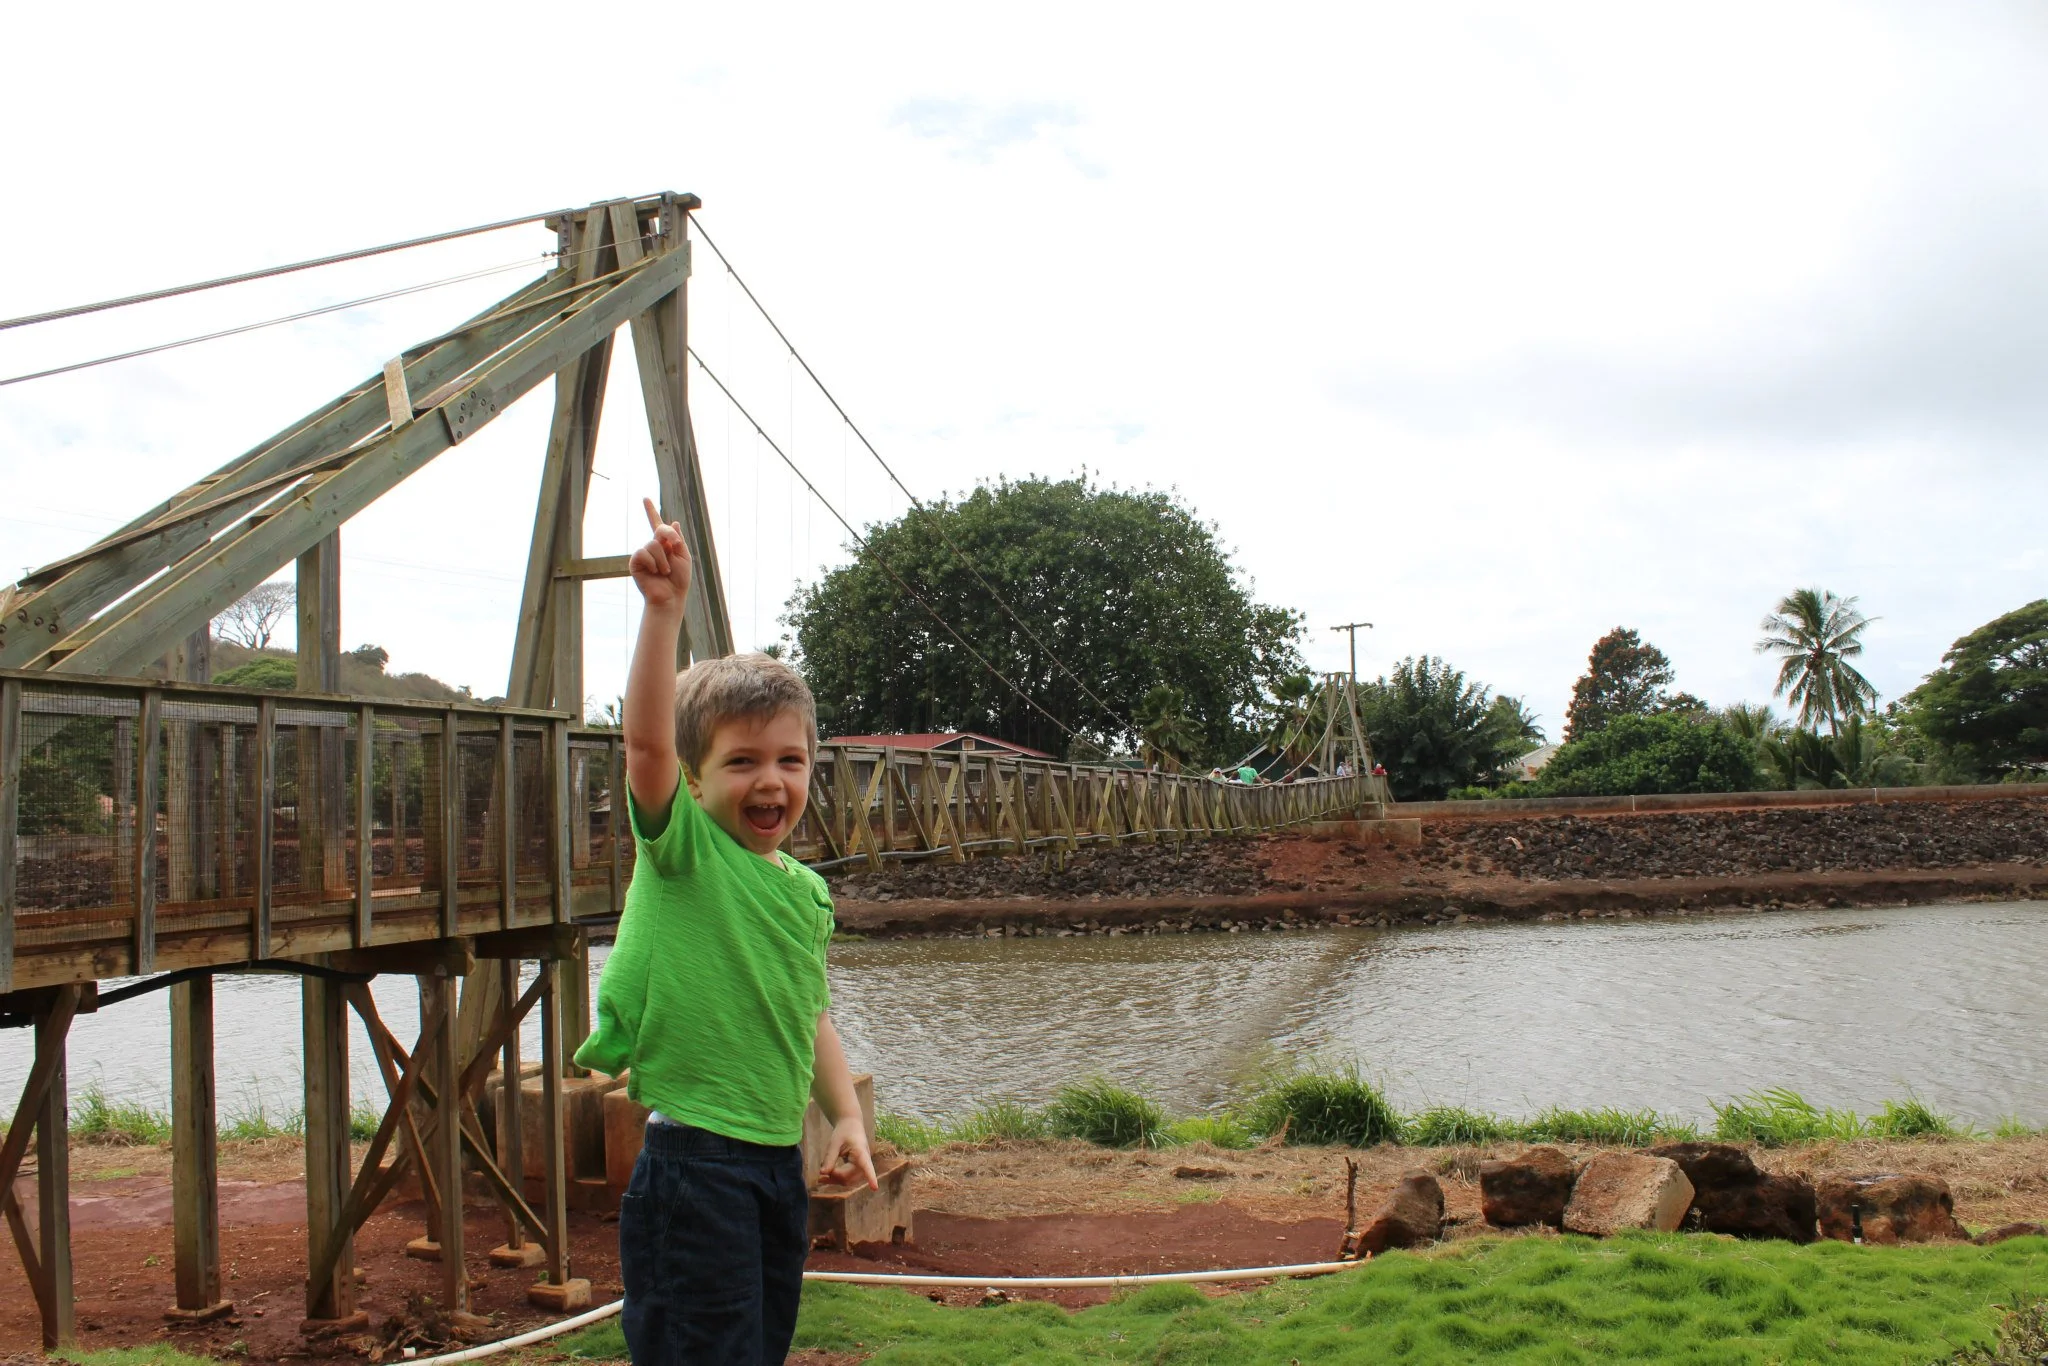 Wells pointing to the swinging bridge. 